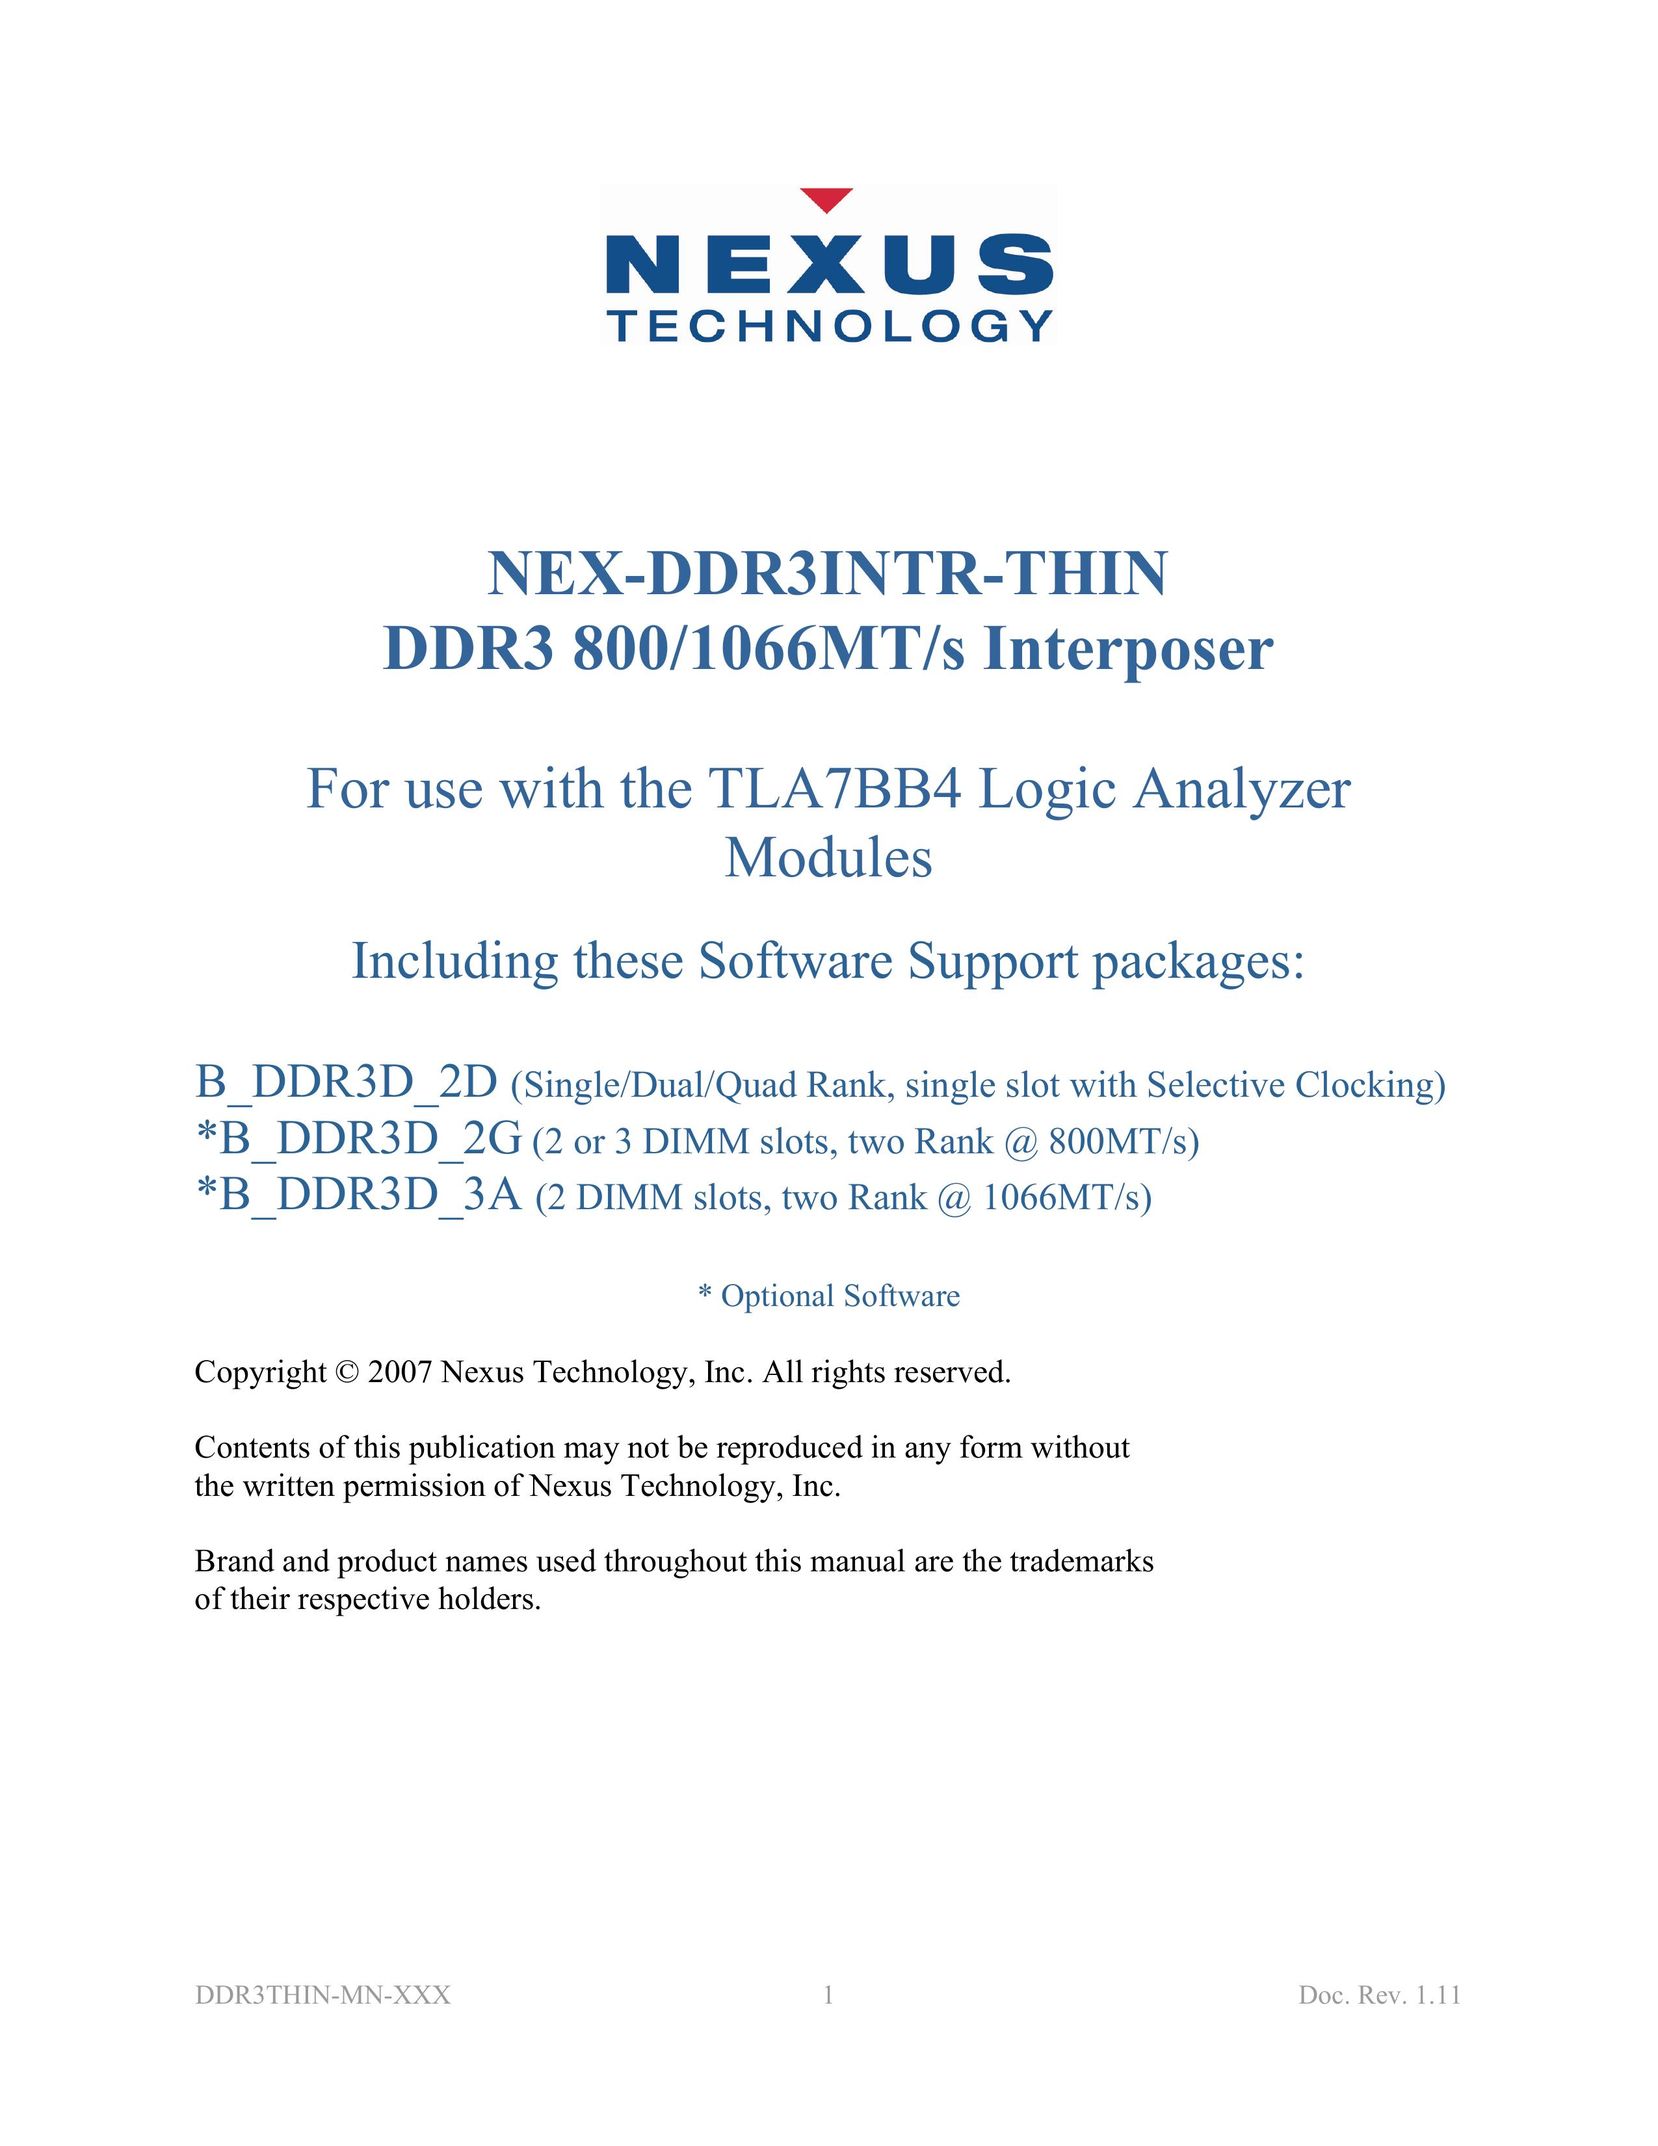 Nexus 21 NEX DDR3INTR THIN Computer Hardware User Manual